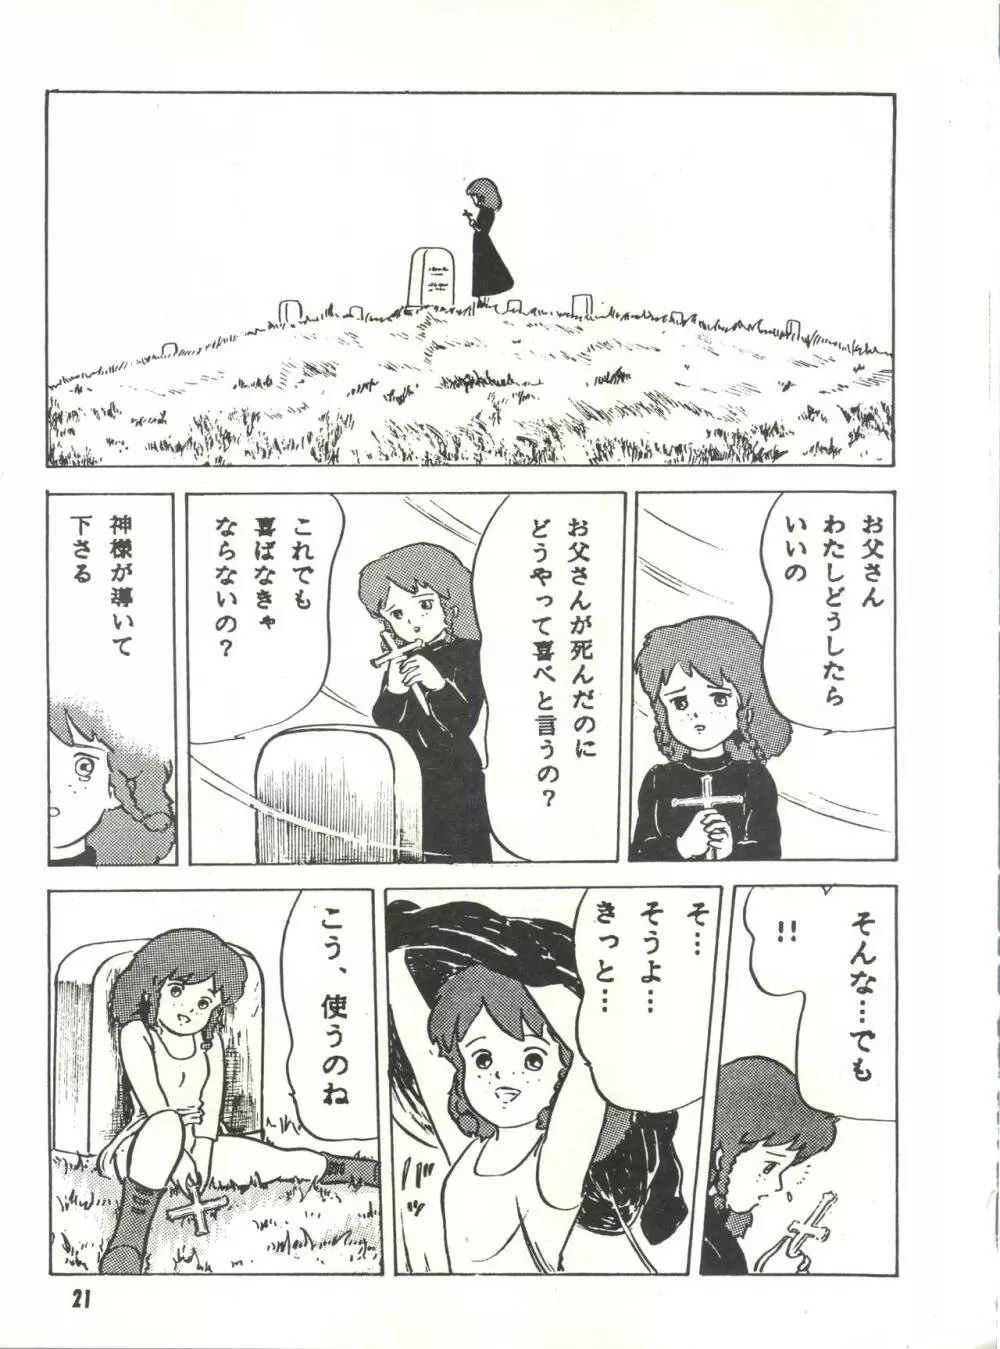 Paろでぃっく3 - page21